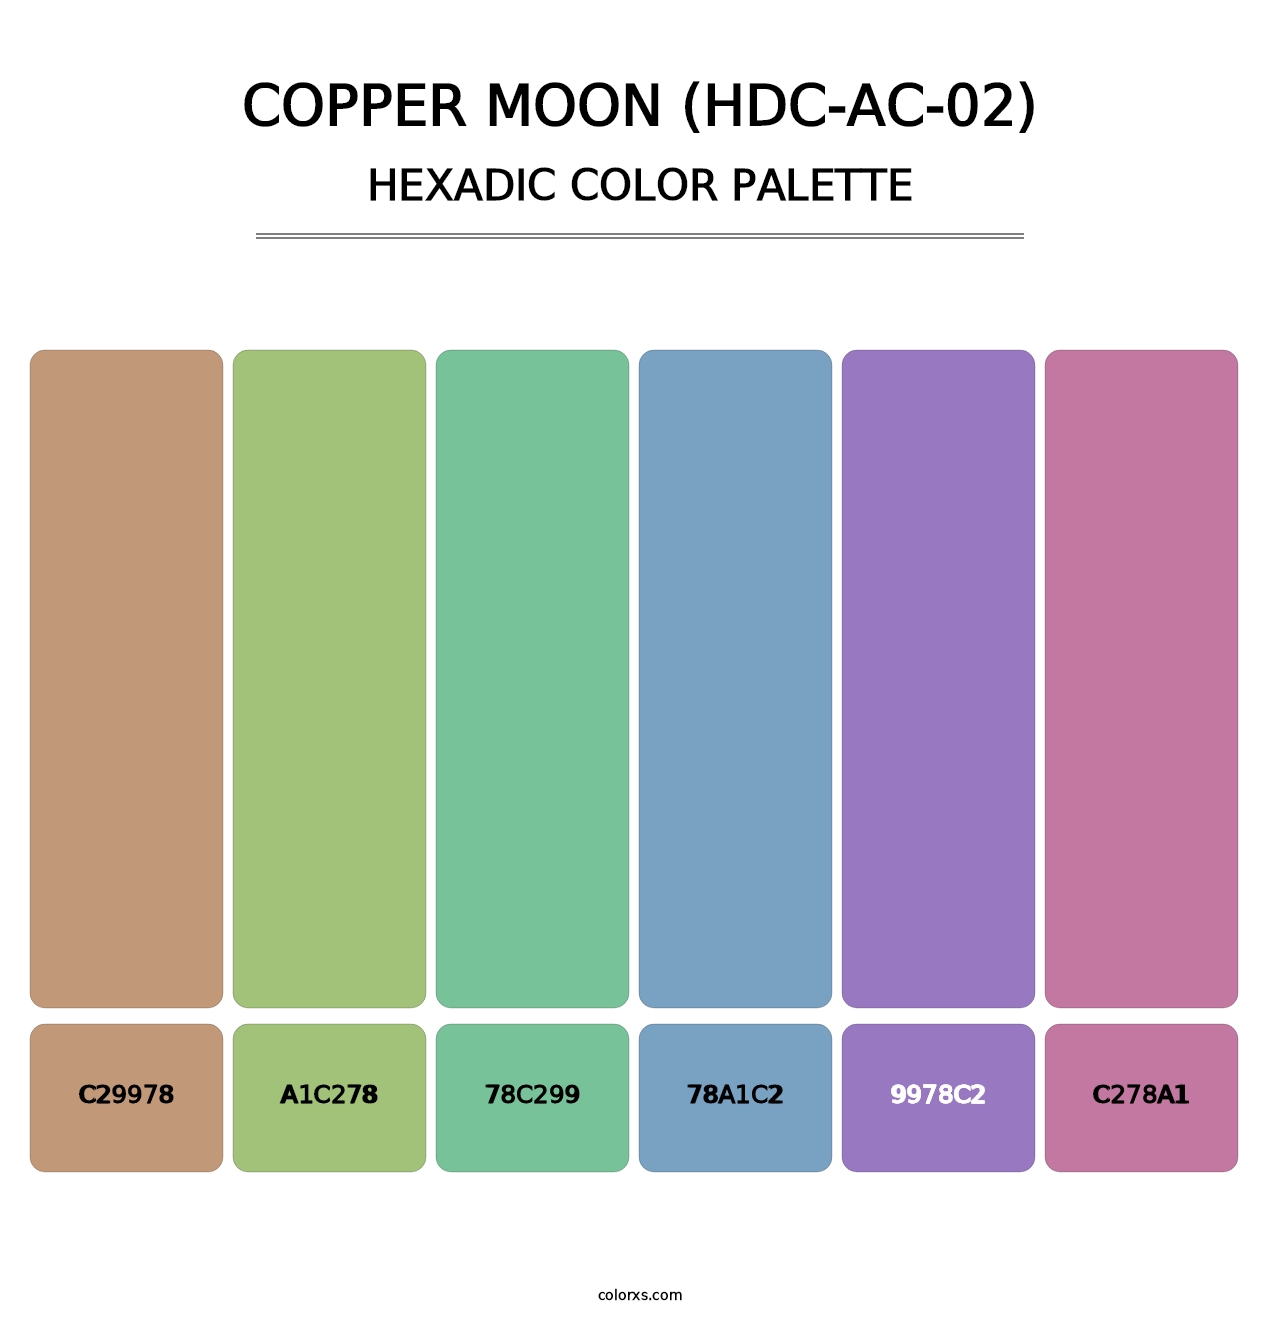 Copper Moon (HDC-AC-02) - Hexadic Color Palette